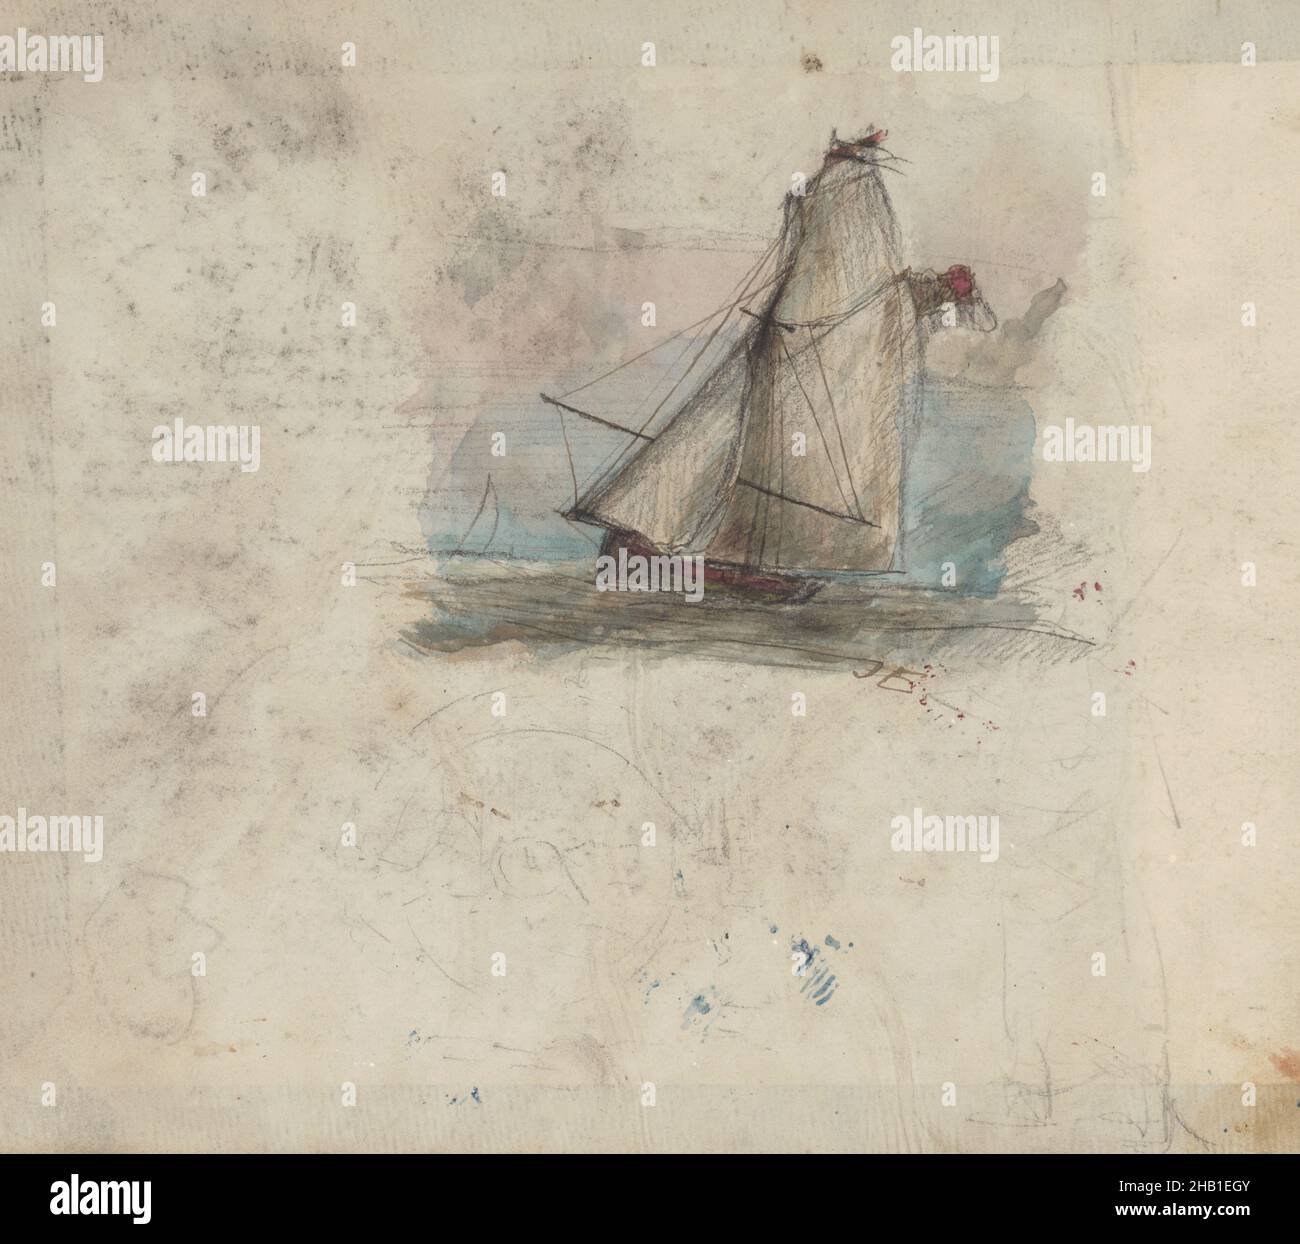 Sailing boat, James Ensor, watercolor painting / drawing, Belgian Art Stock Photo